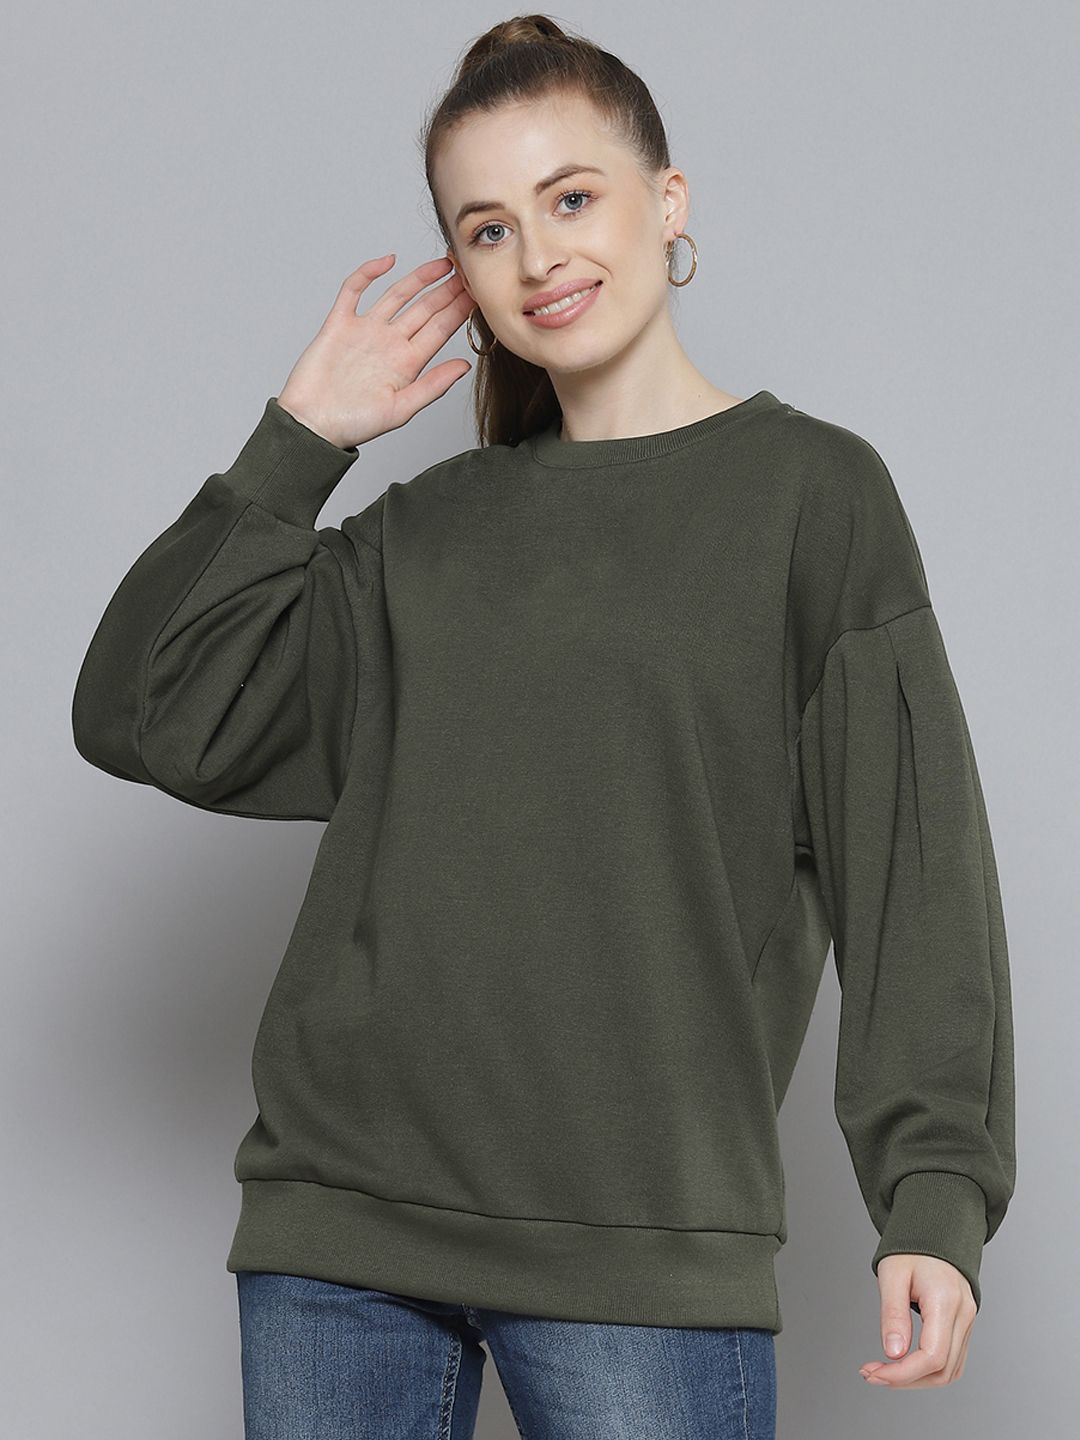 Femella Women Olive Green Fleece Sweatshirt Price in India